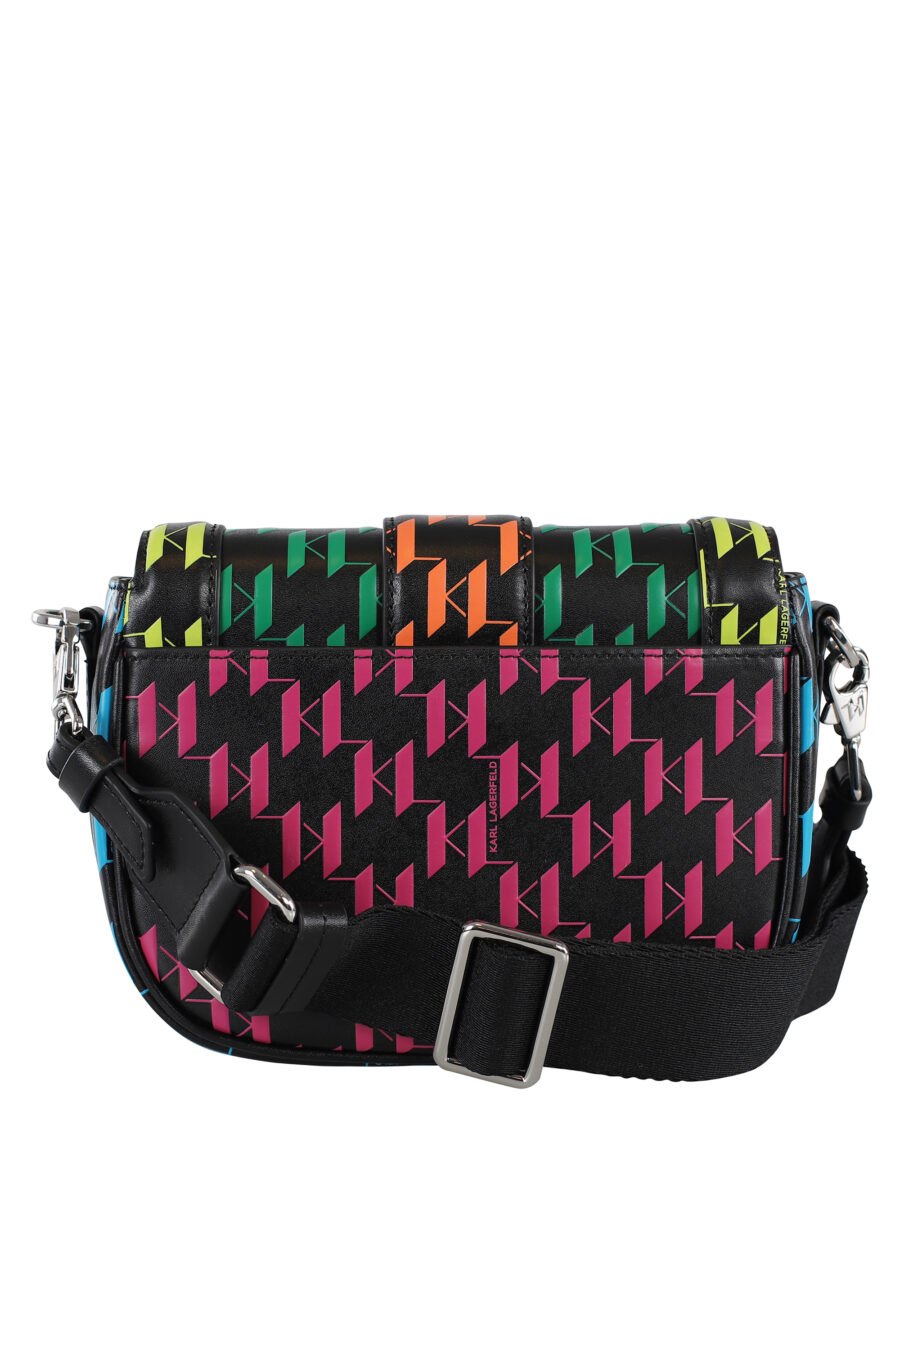 Multicoloured bowling style shoulder bag - IMG 6916